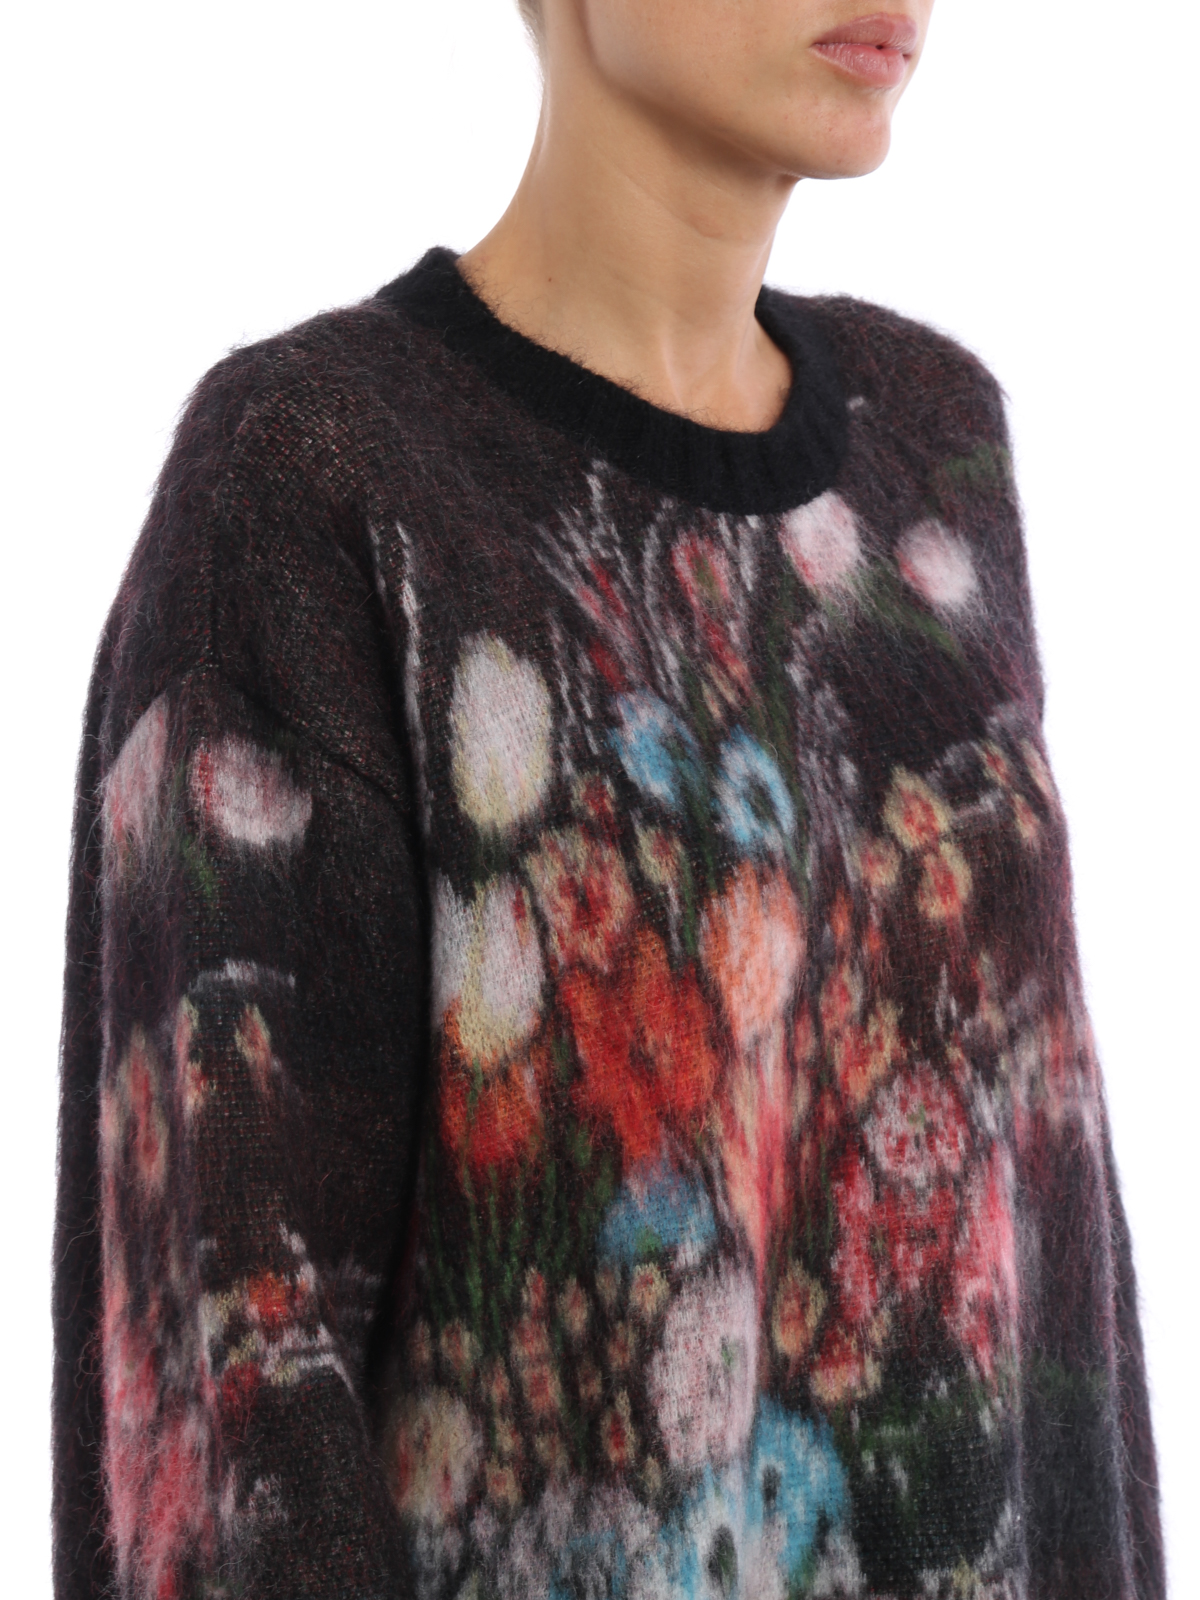 Crew necks N°21 - Floral jacquard fluffy sweater - N2M0A00170860001